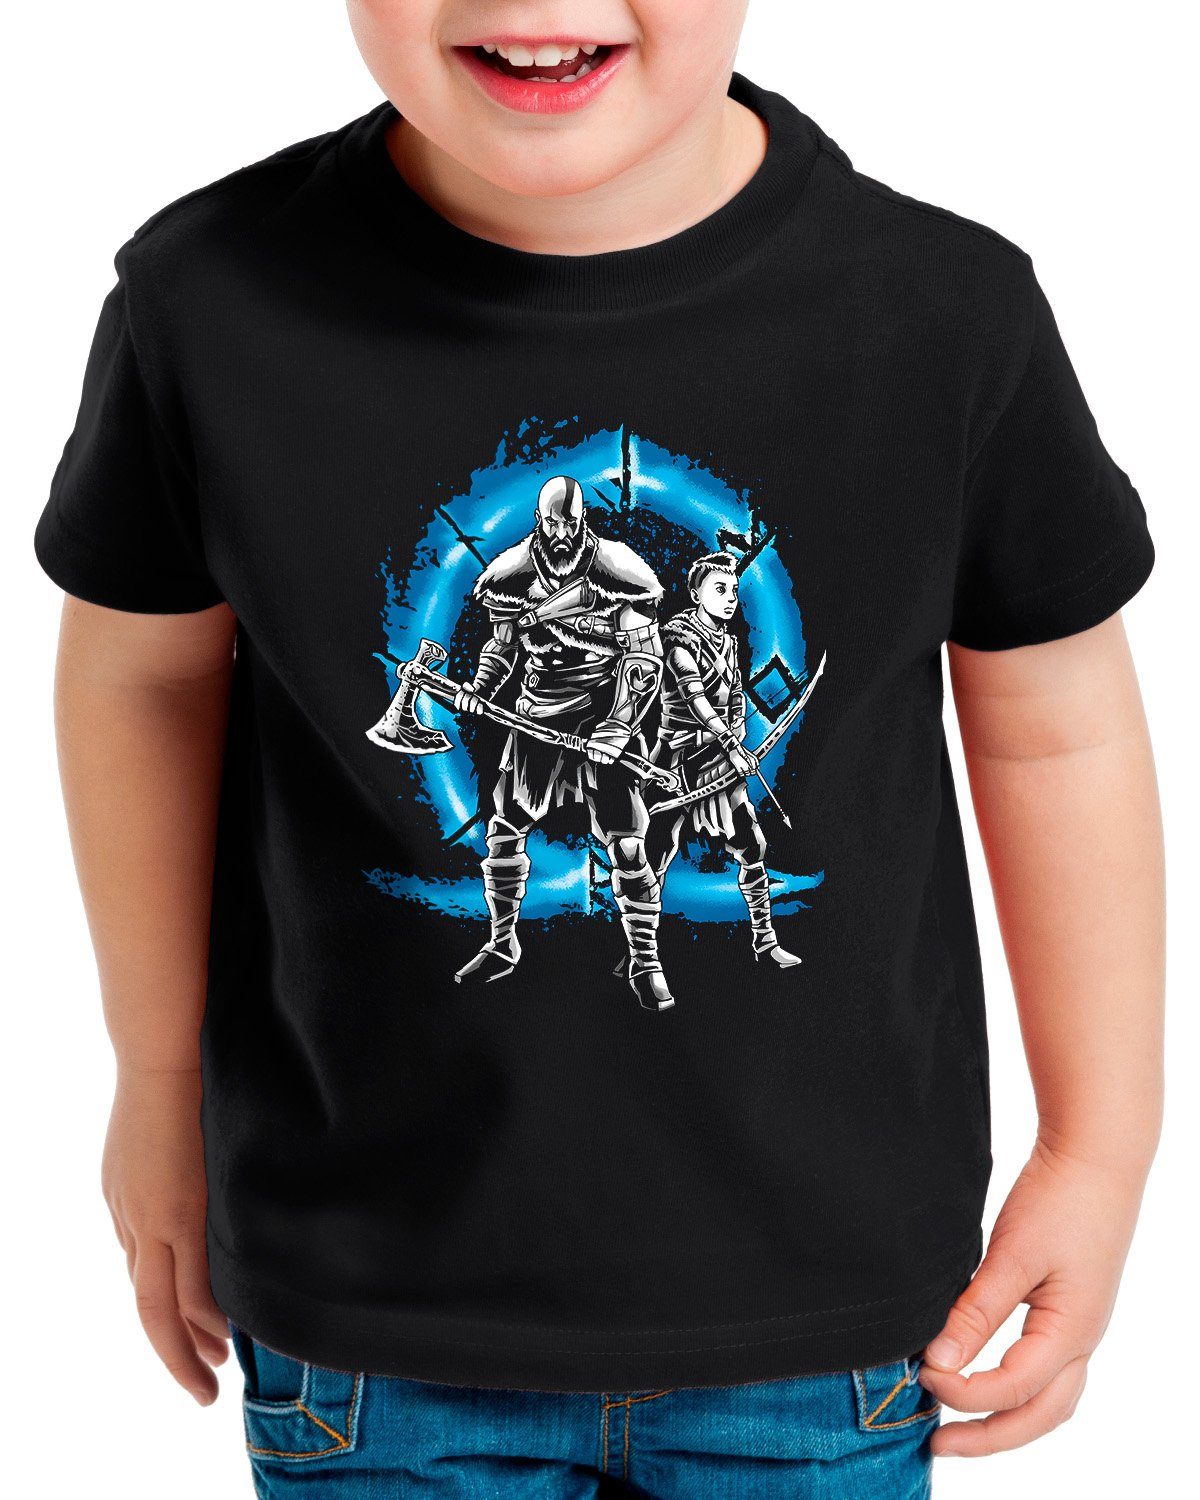 Family action god Kinder of kratos adventure style3 T-Shirt Print-Shirt war War